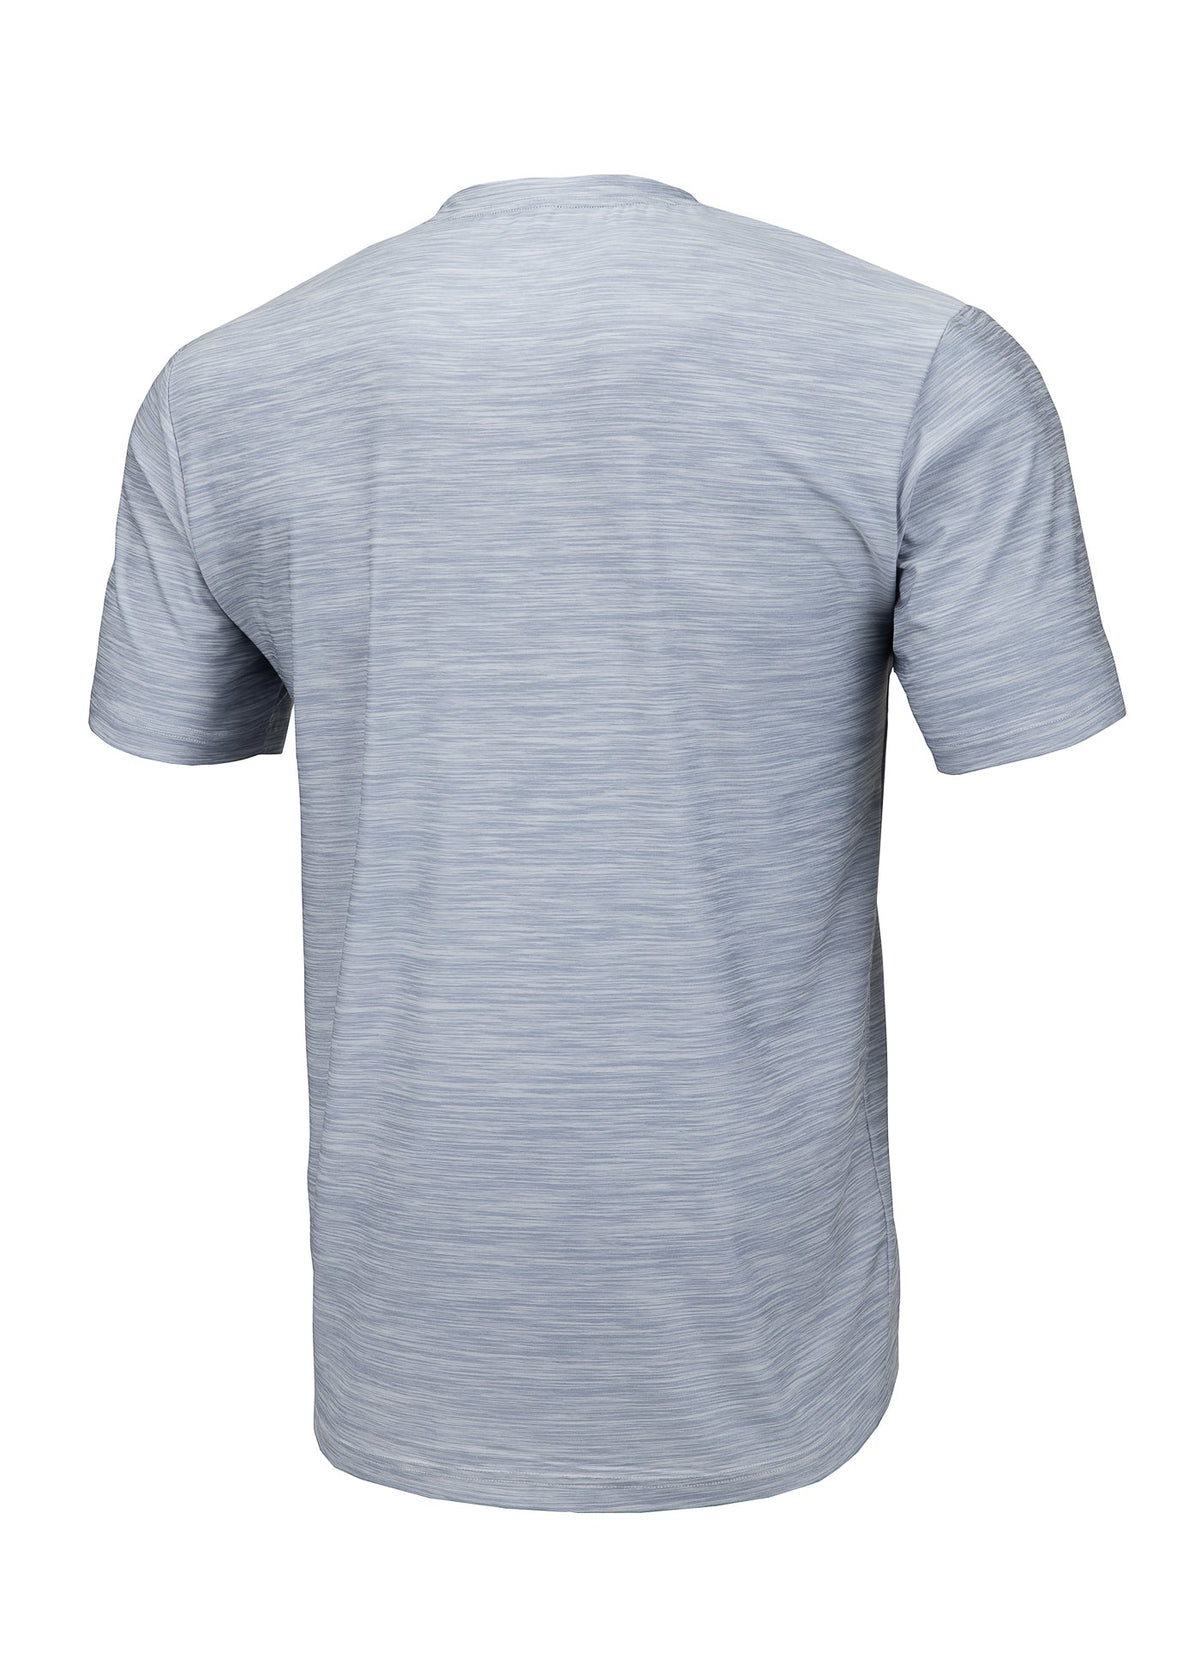 T-shirt Middleweight HILLTOP Grey Melange.